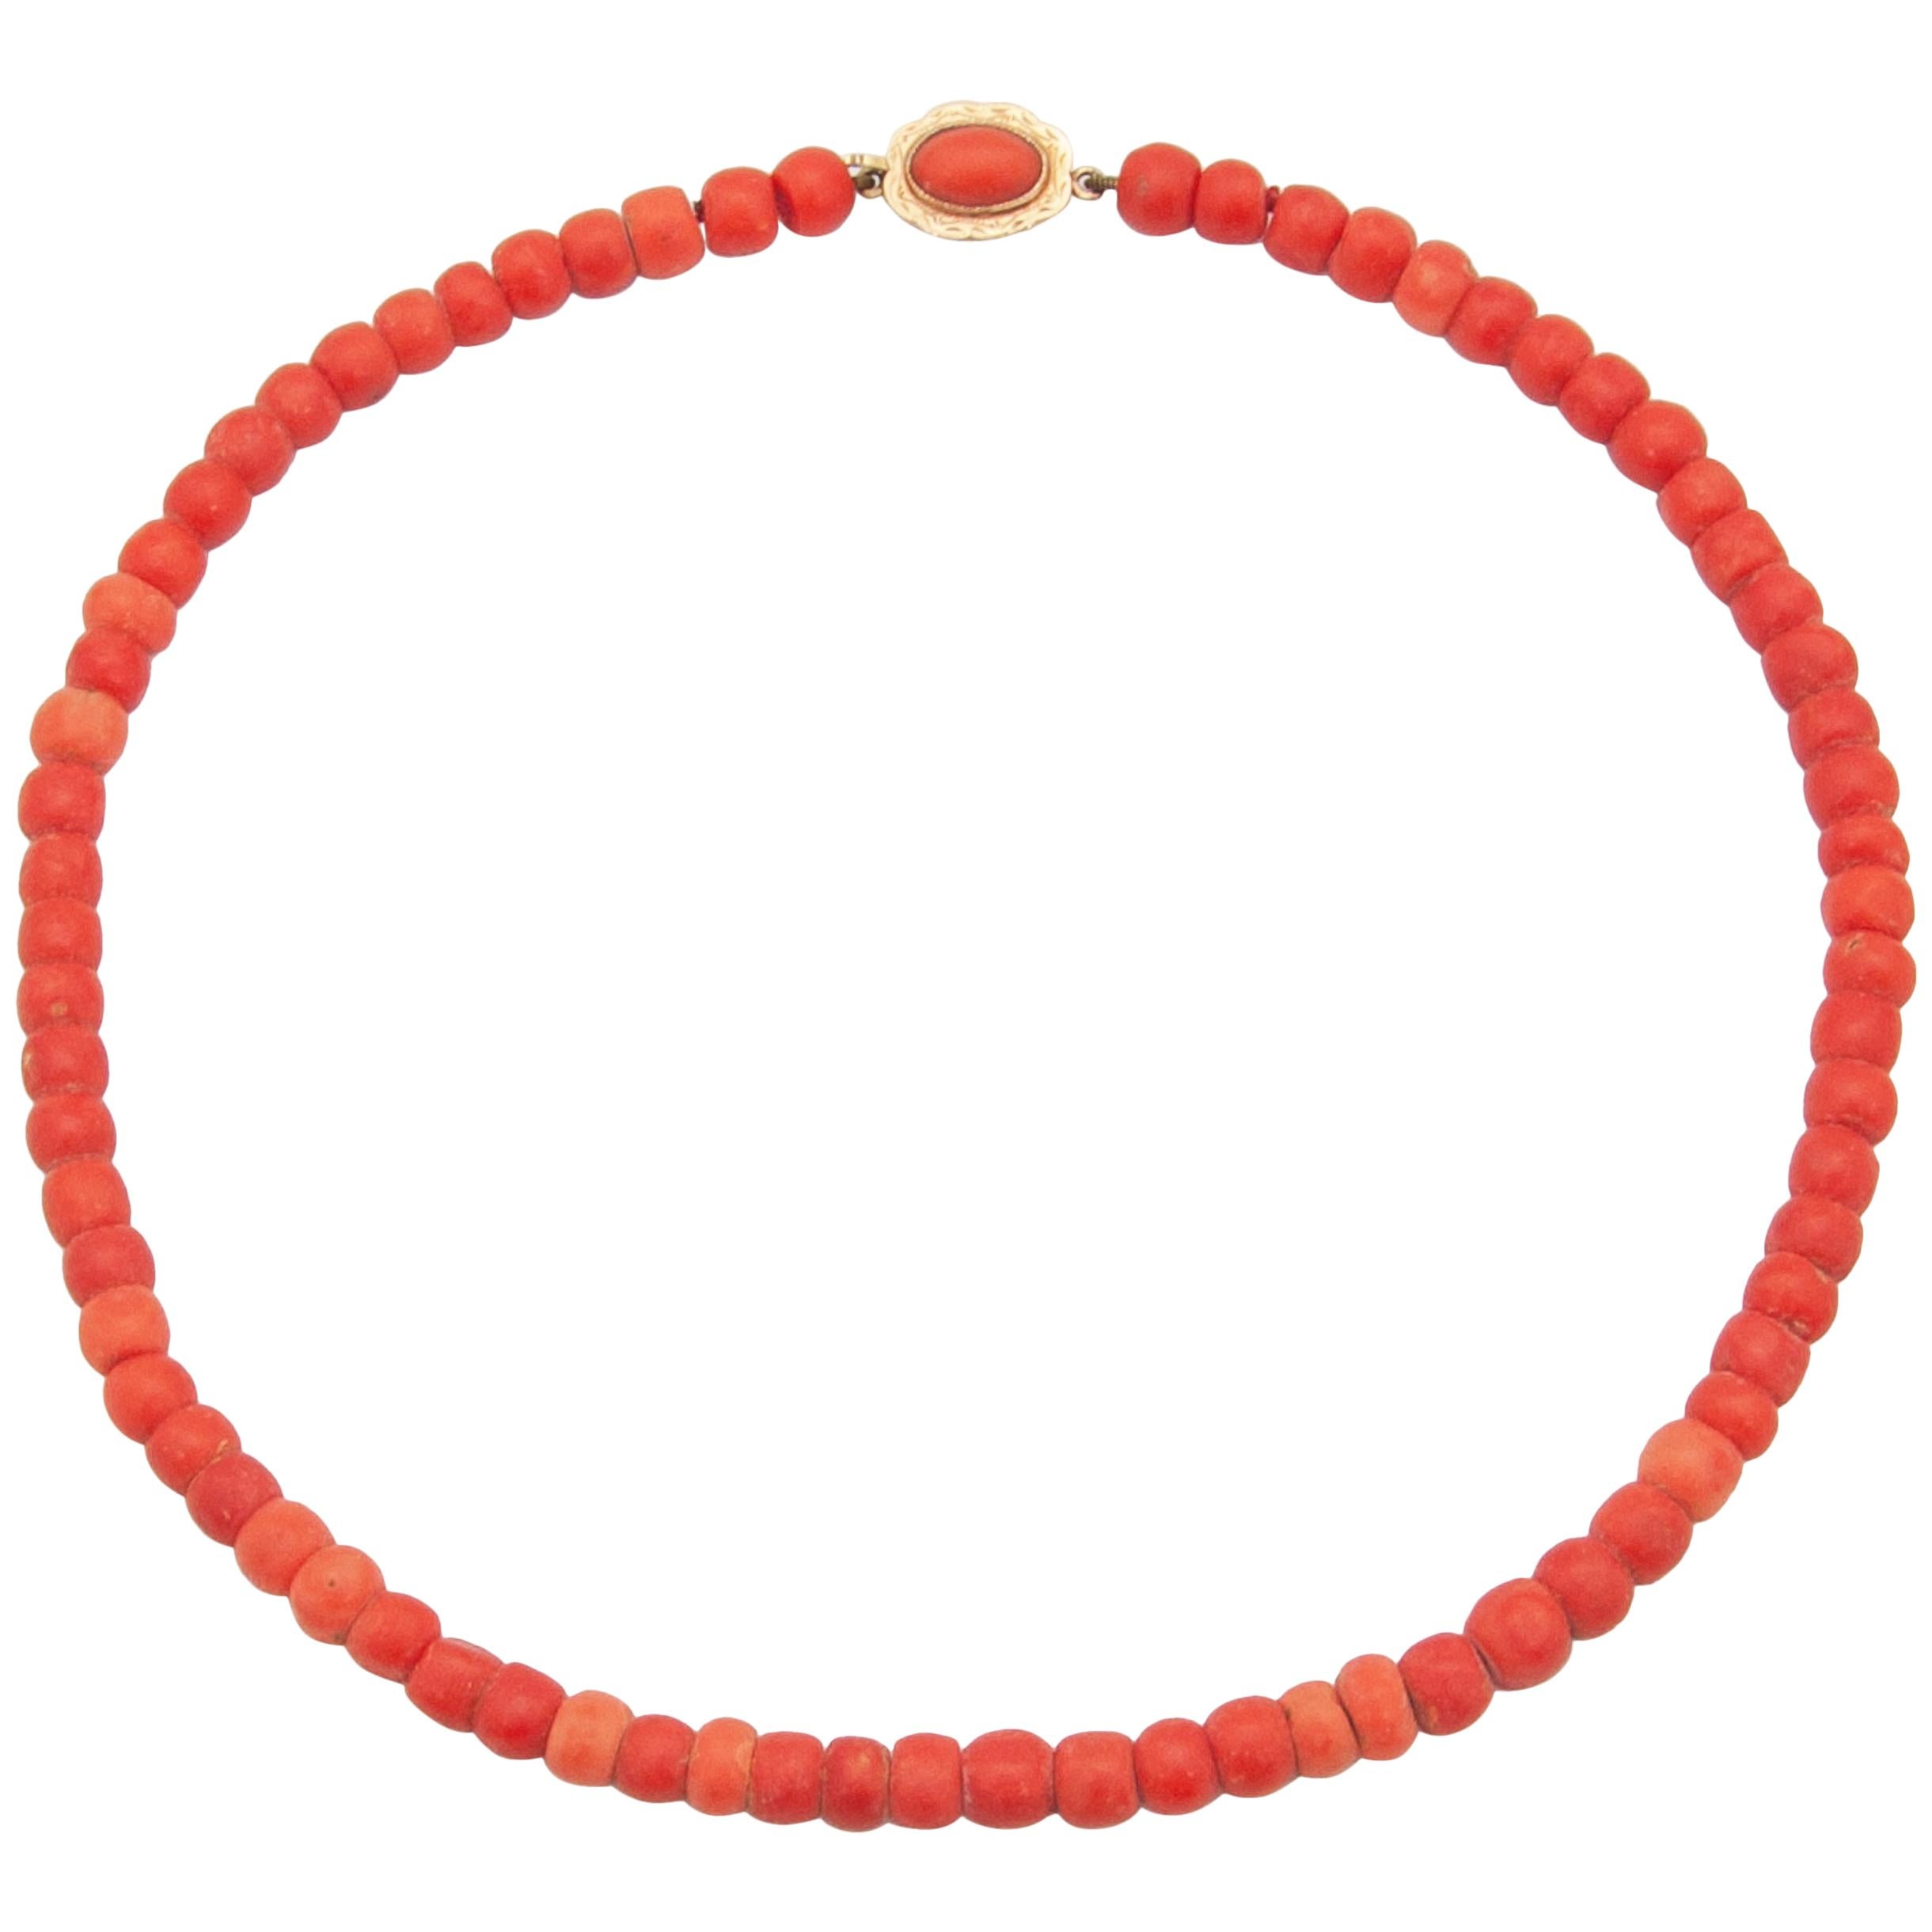 coral beads bracelet